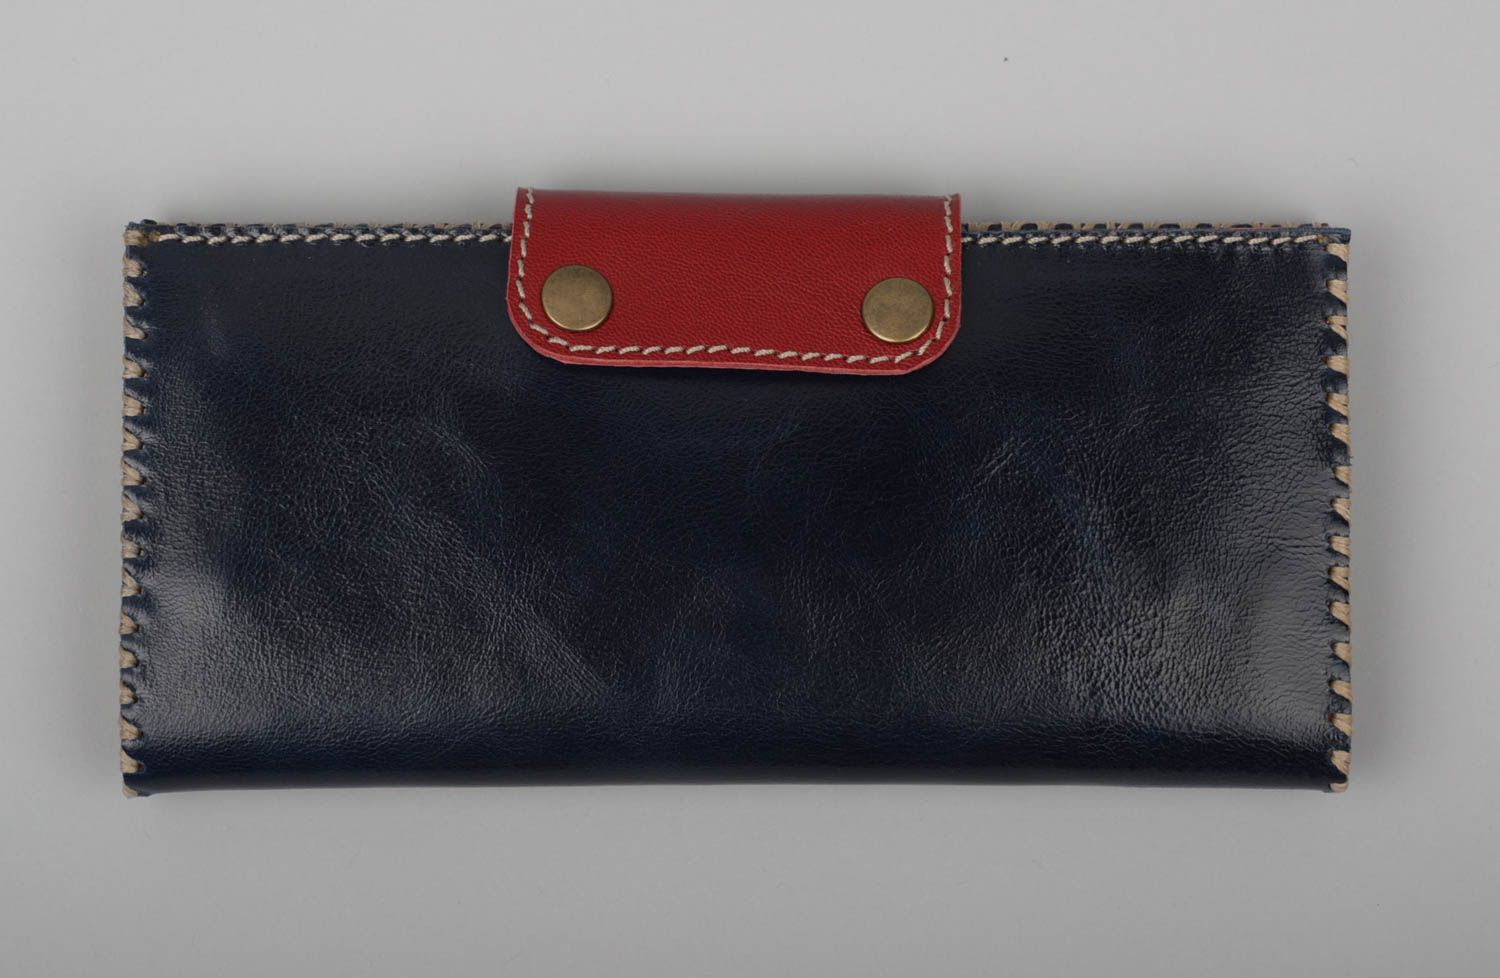 Black leather wallet stylish designer accessories beautiful unusual purse photo 2